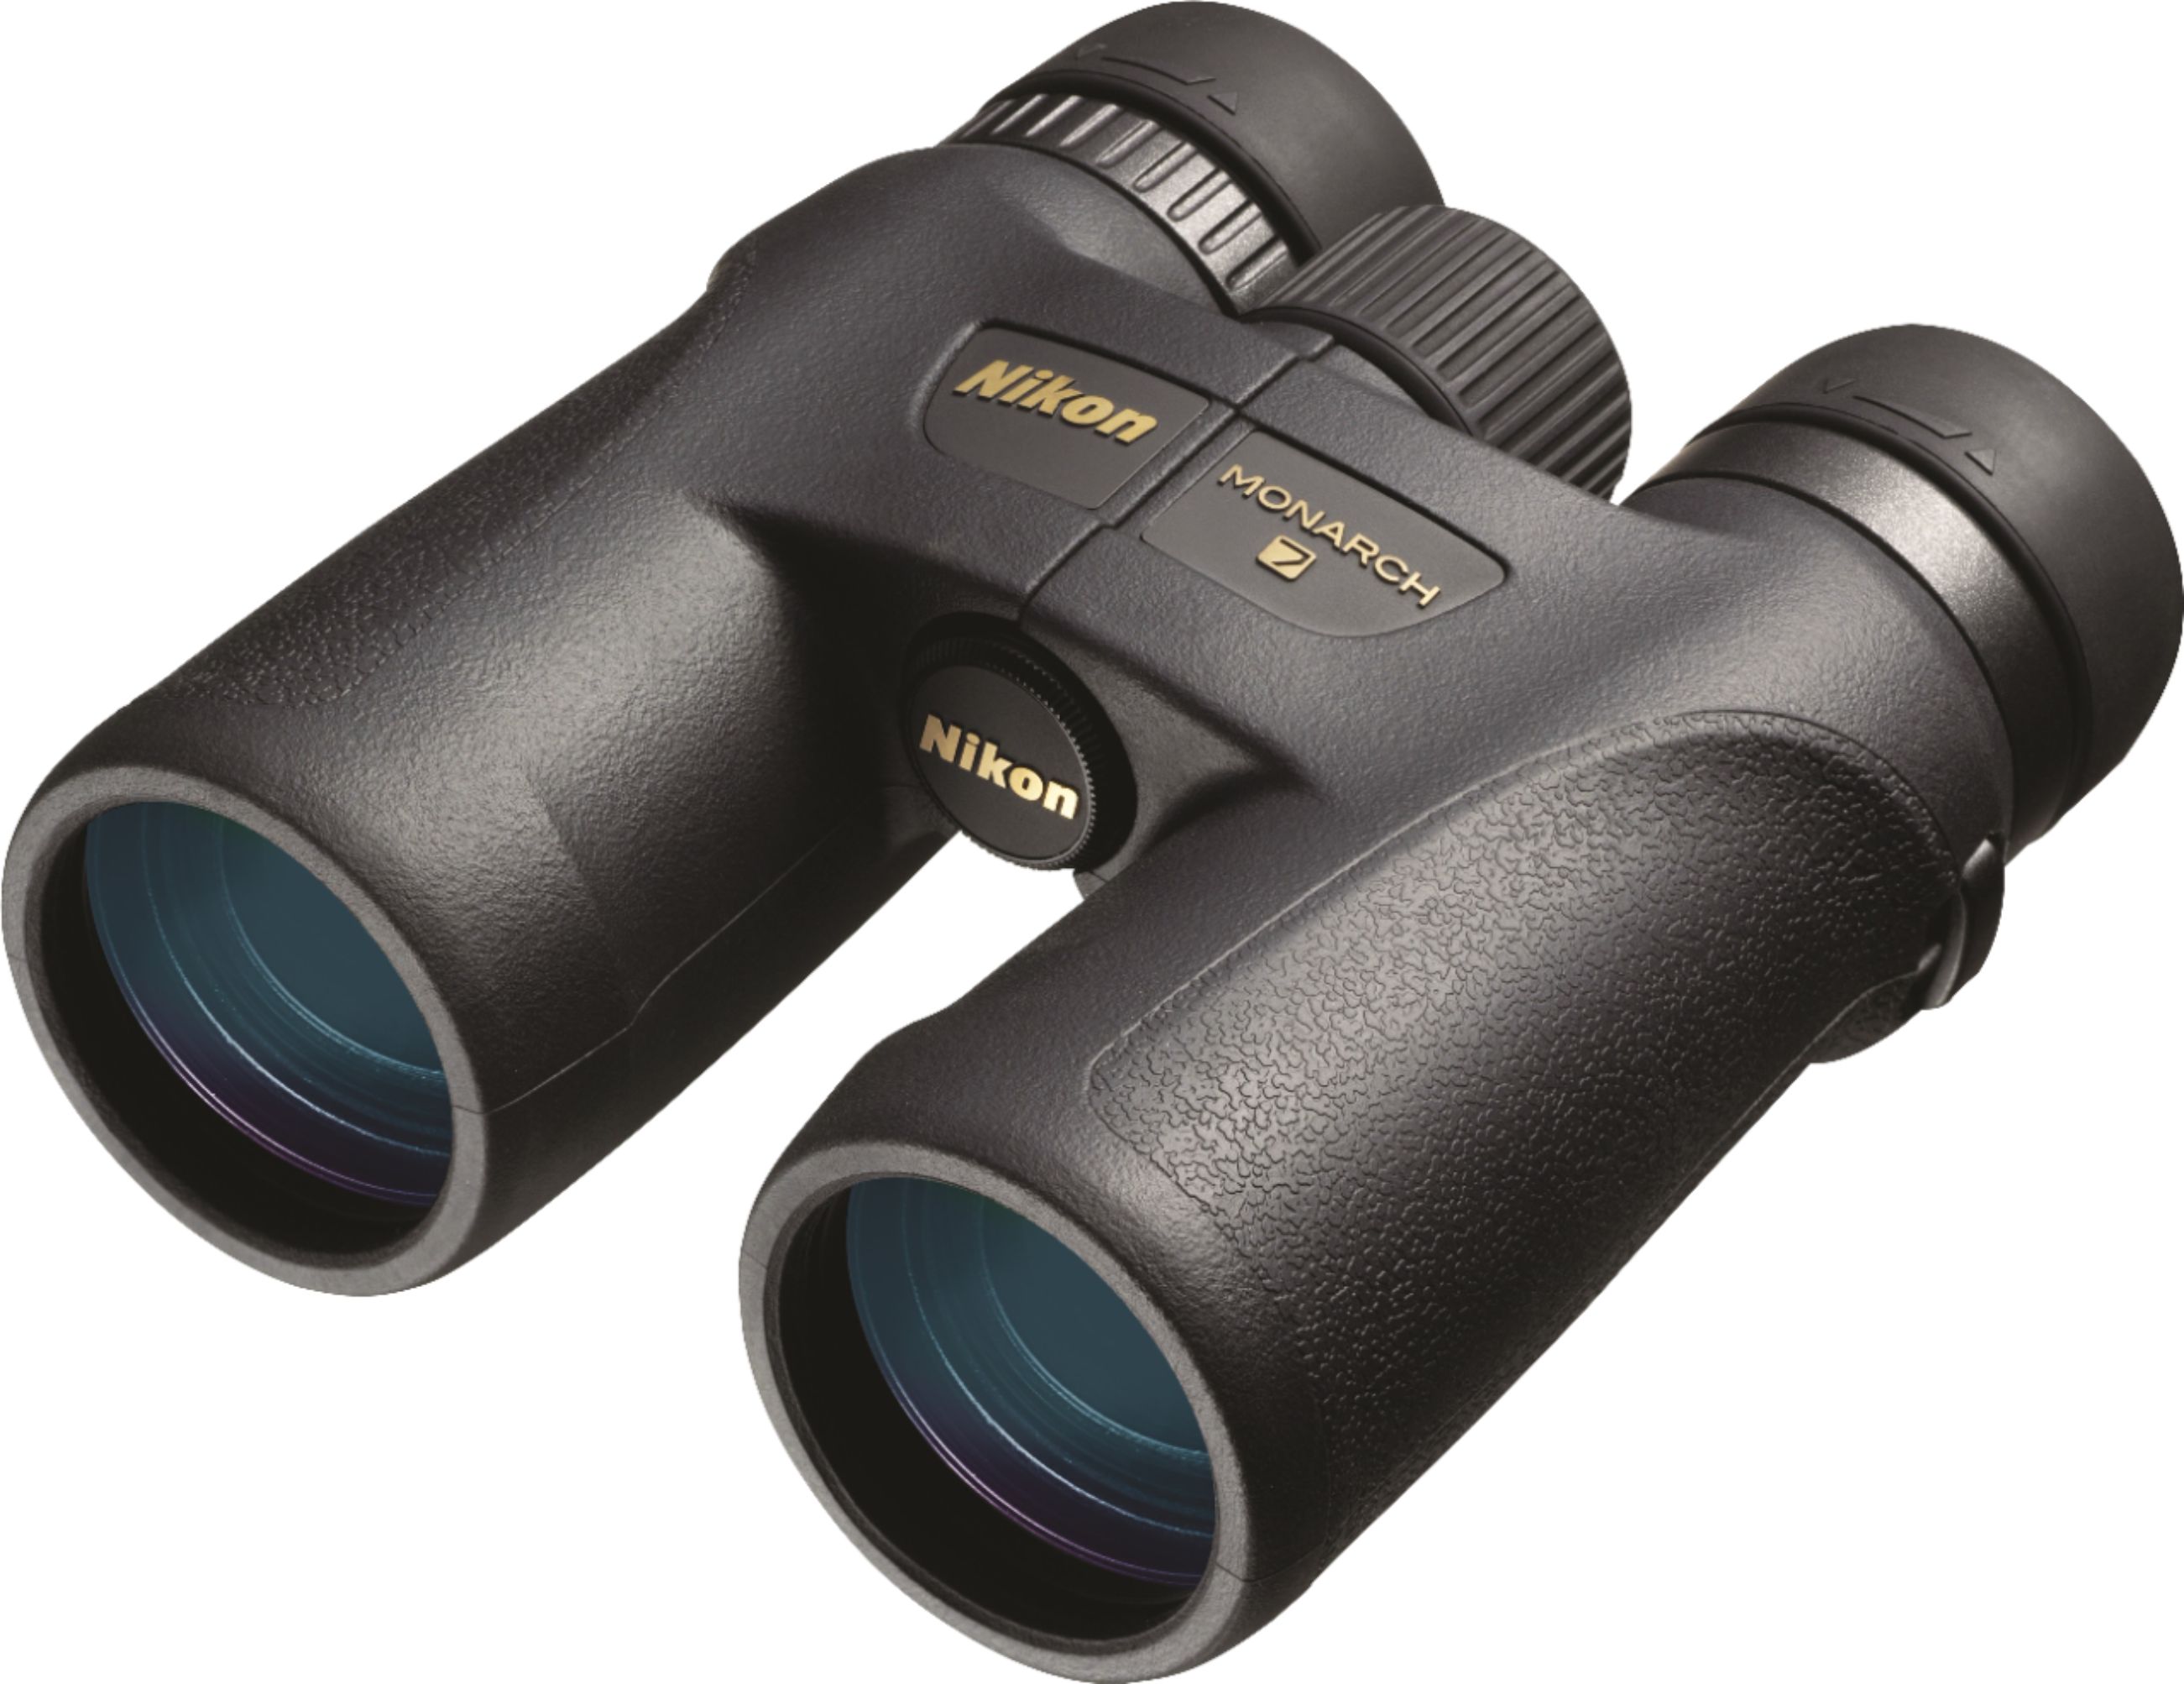 Angle View: Nikon - Monarch 7 8x42 Binoculars - Black